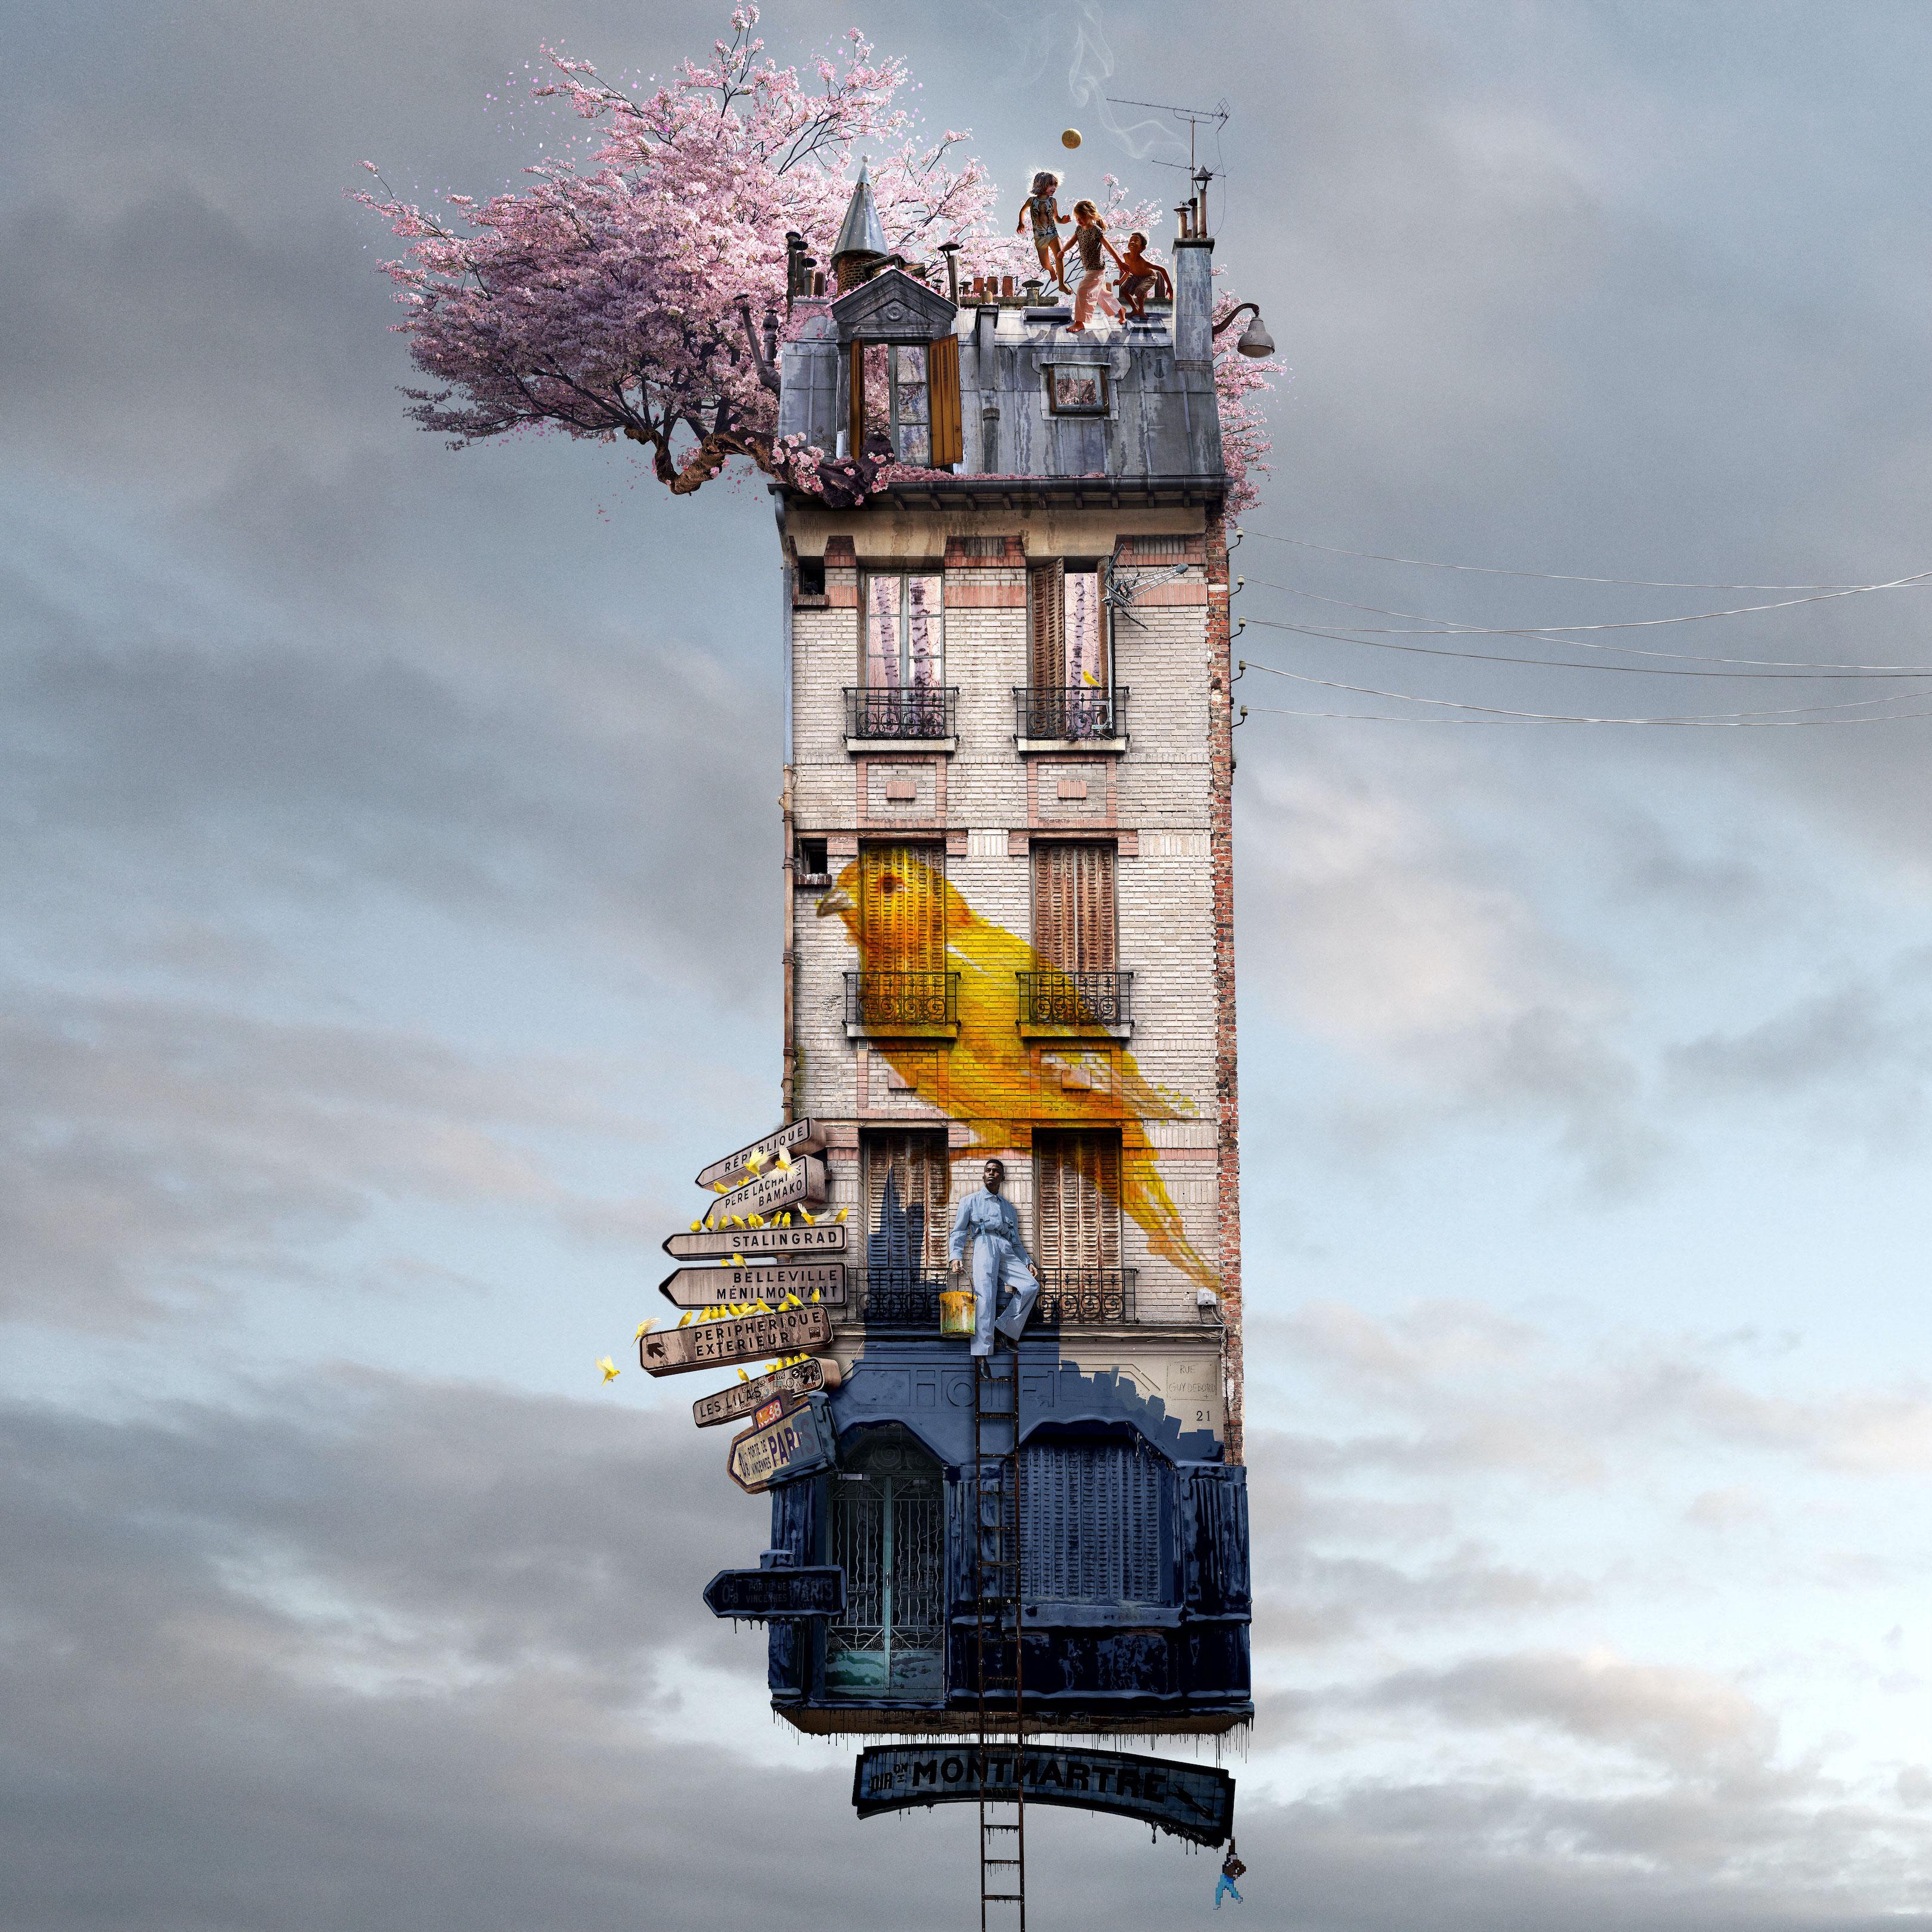 Laurent Chéhère Color Photograph - 3 Samourais - Contemporary whimsical digital photo montage of a flying house 